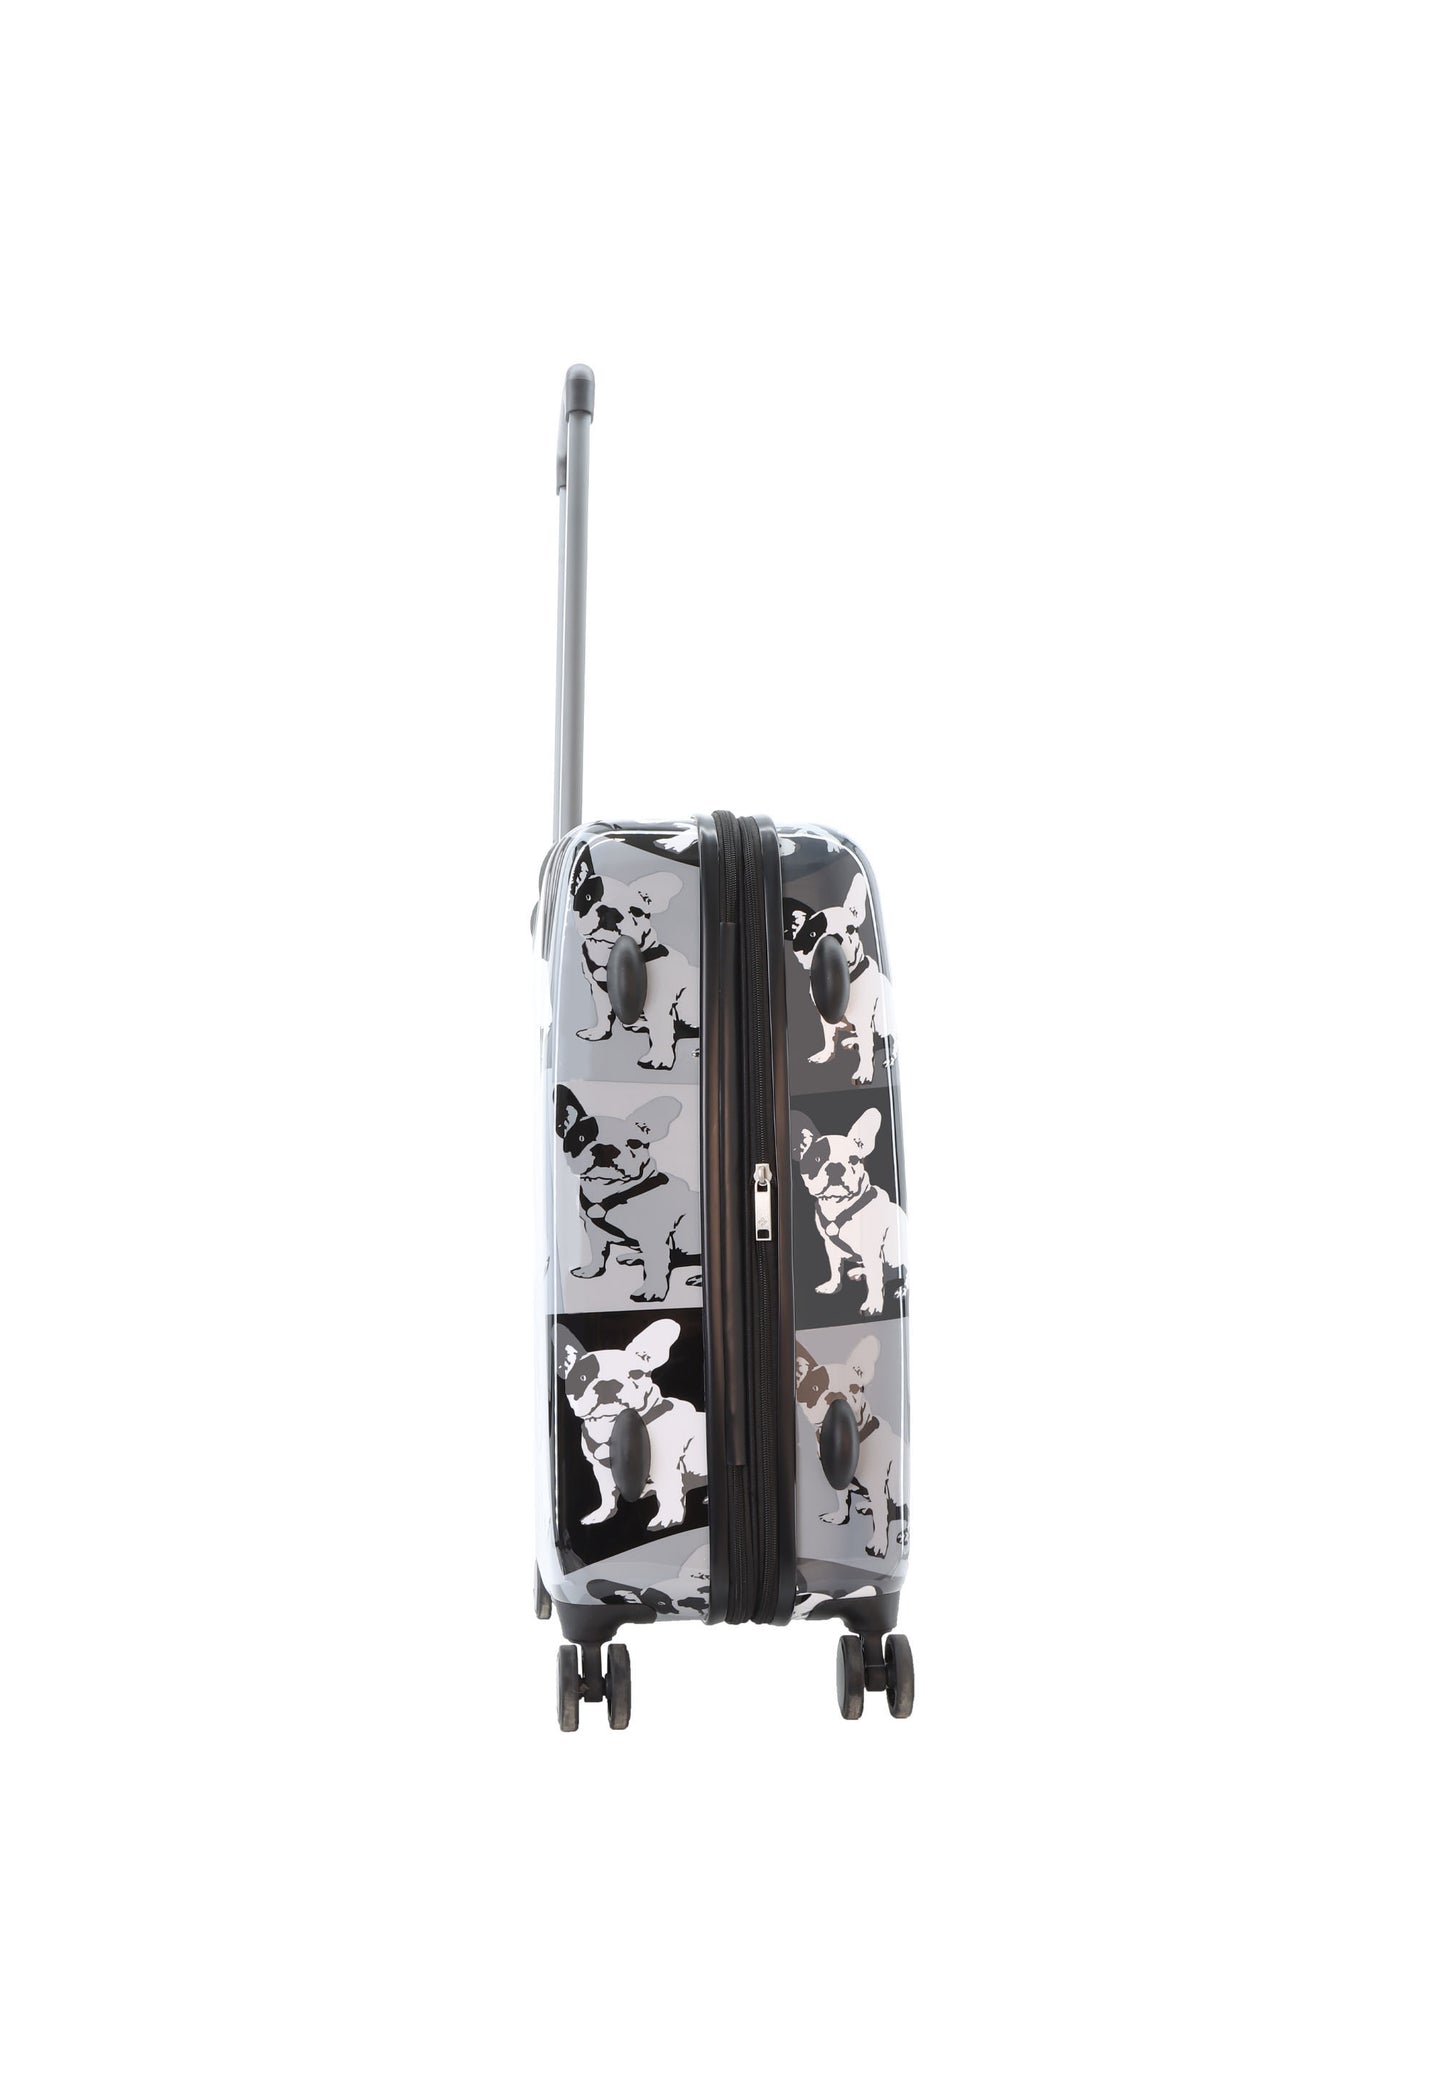 Valise rigide / trolley / valise de voyage Saxoline bleu - 67 cm (moyen) - imprimé monochrome Bulldog